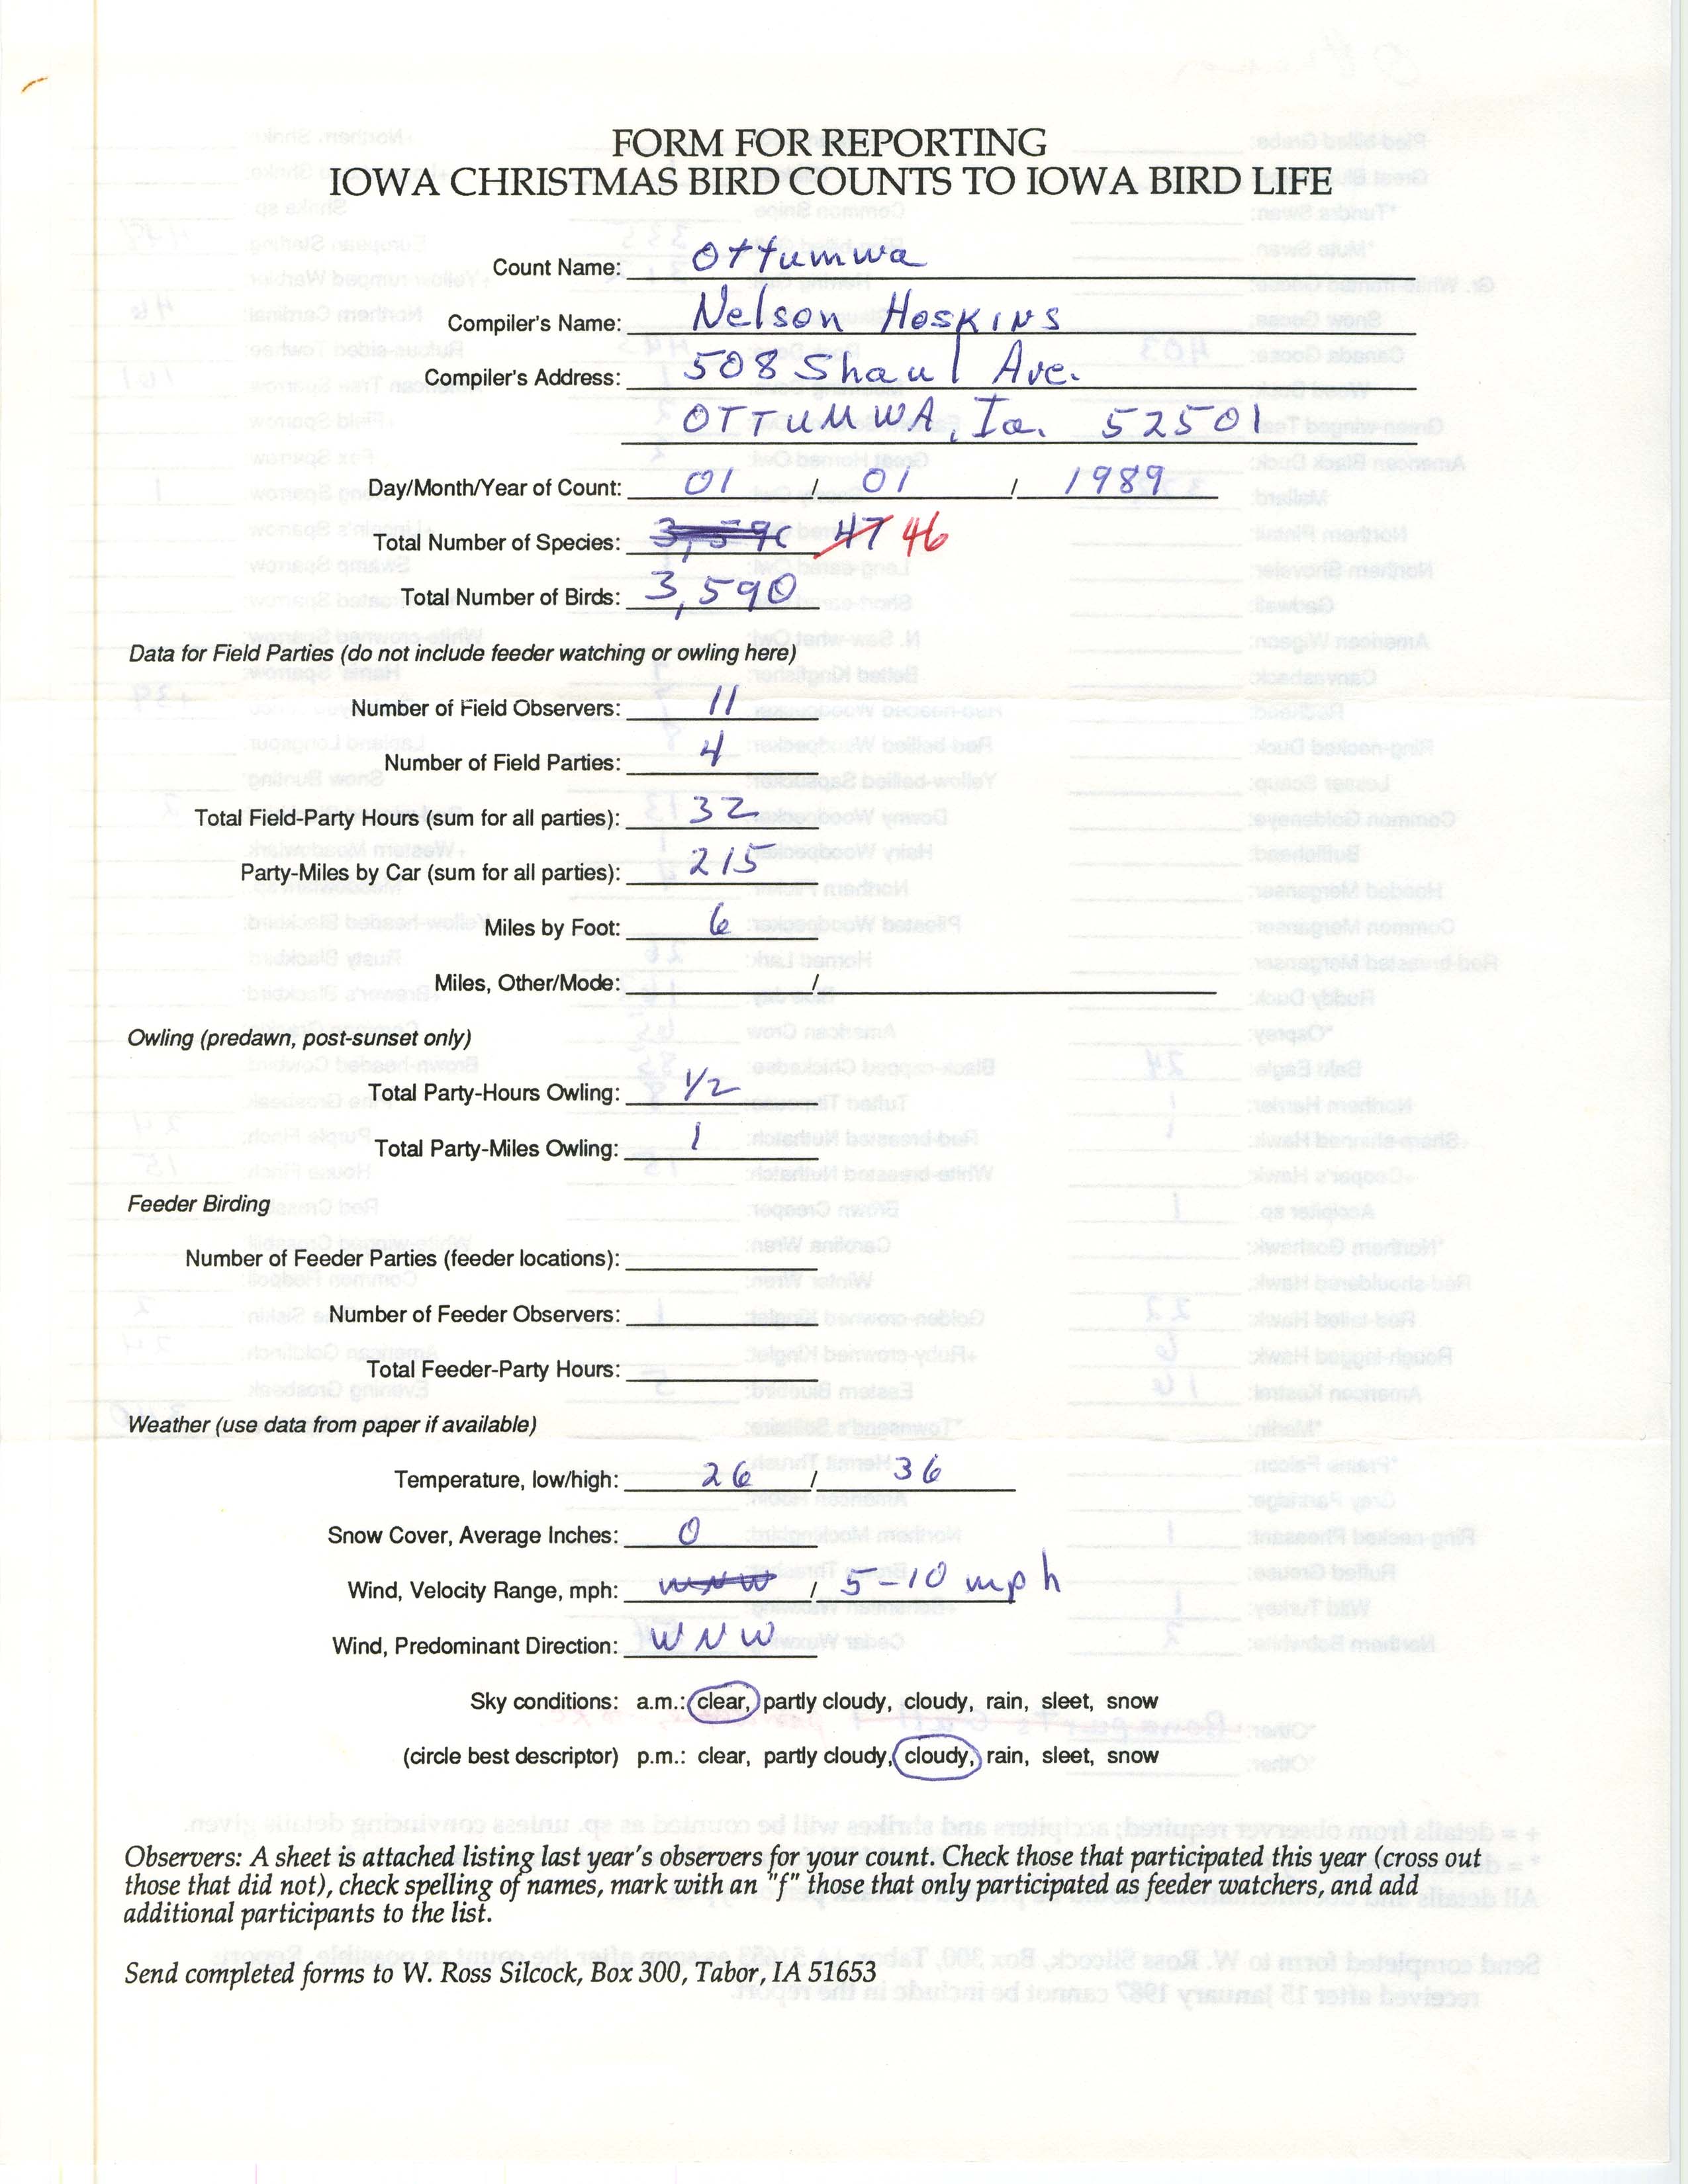 Form for reporting Iowa Christmas bird counts to Iowa Bird Life, Nelson R. Hoskins, January 1, 1989